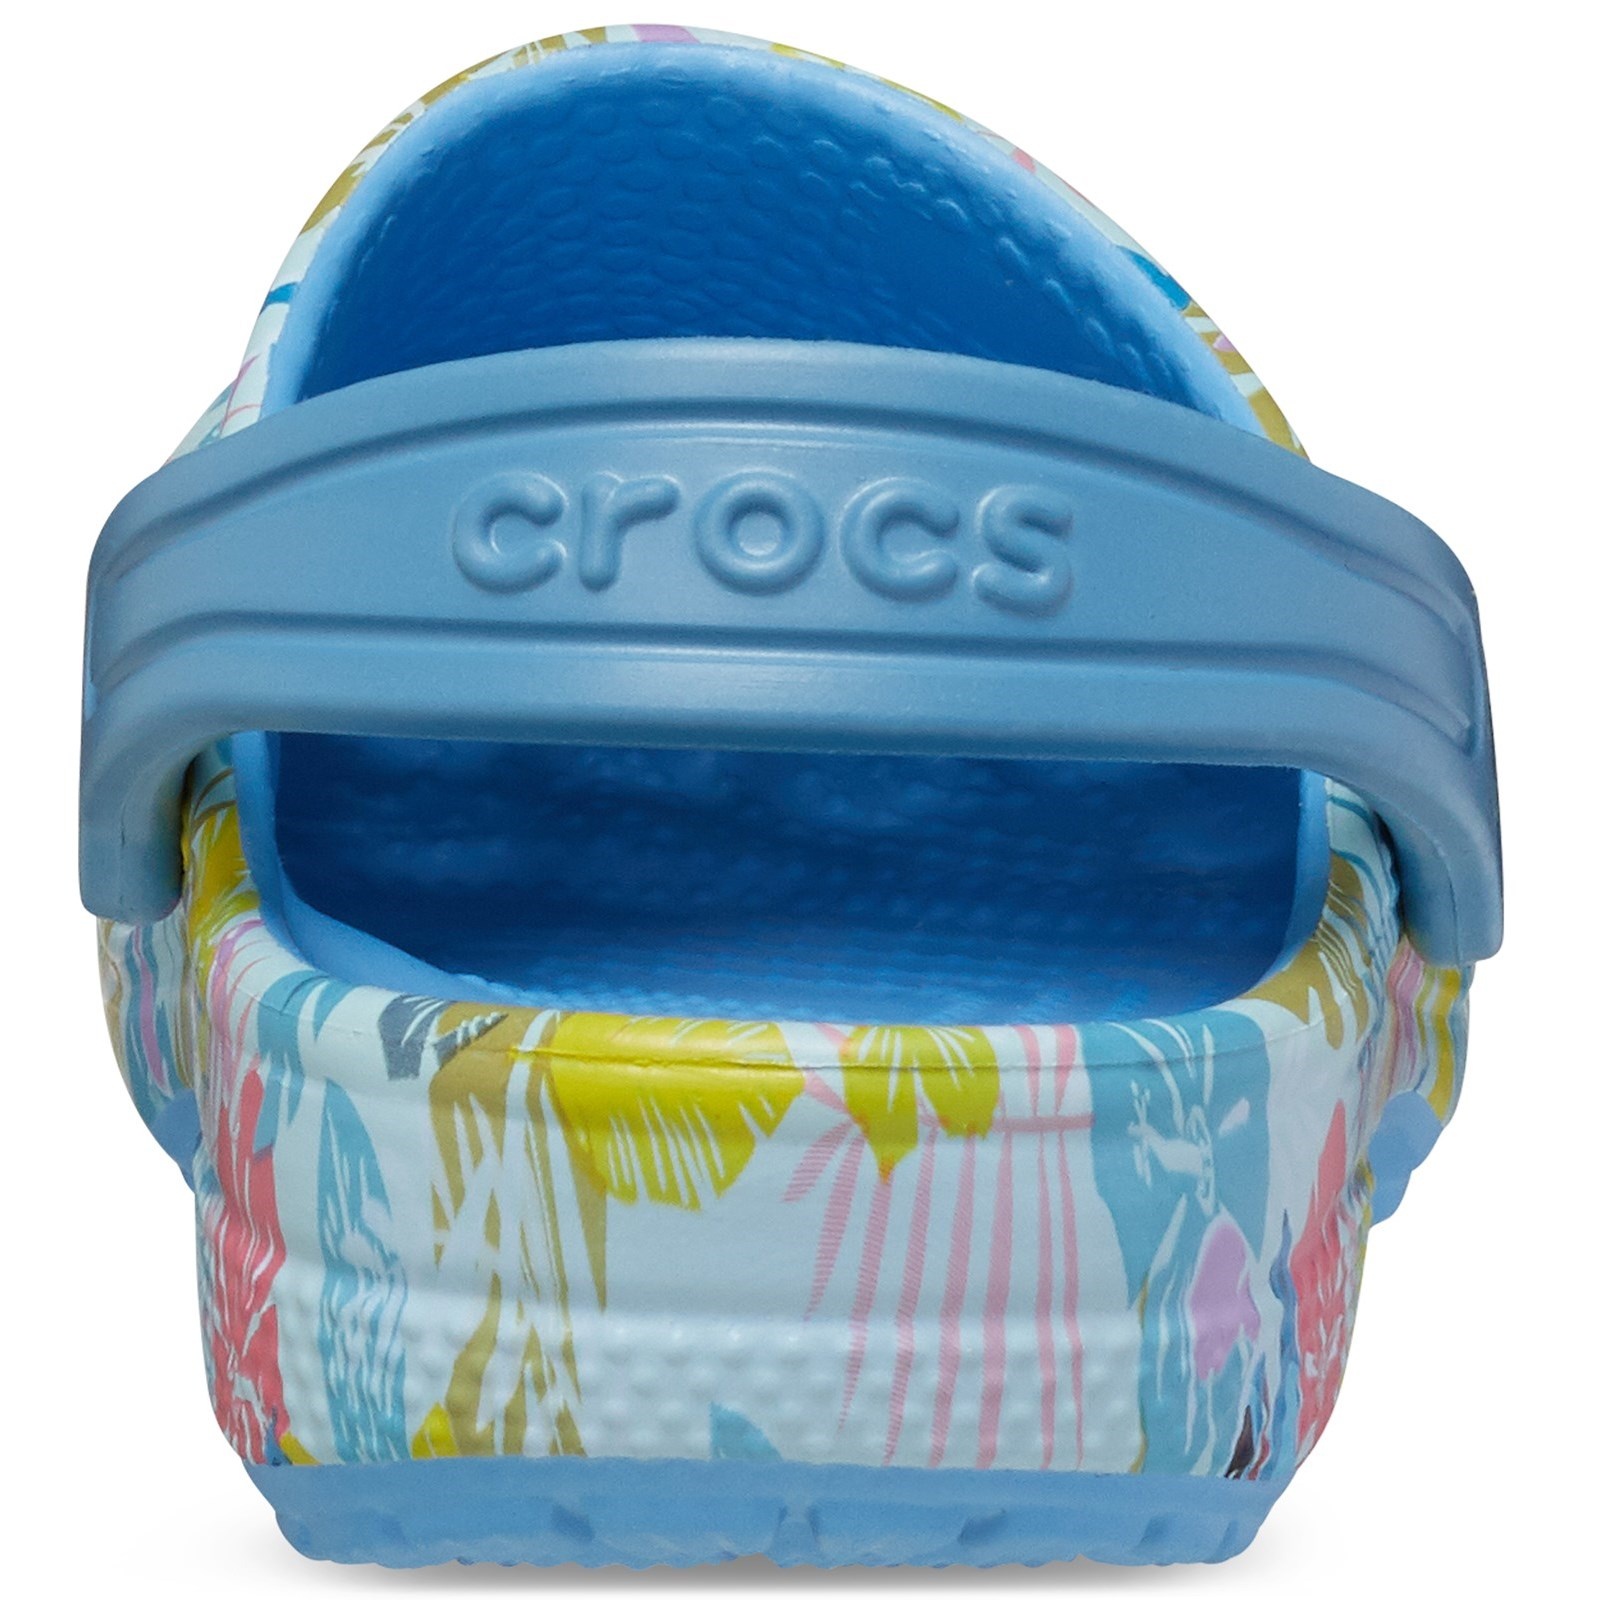 Crocs Stitch